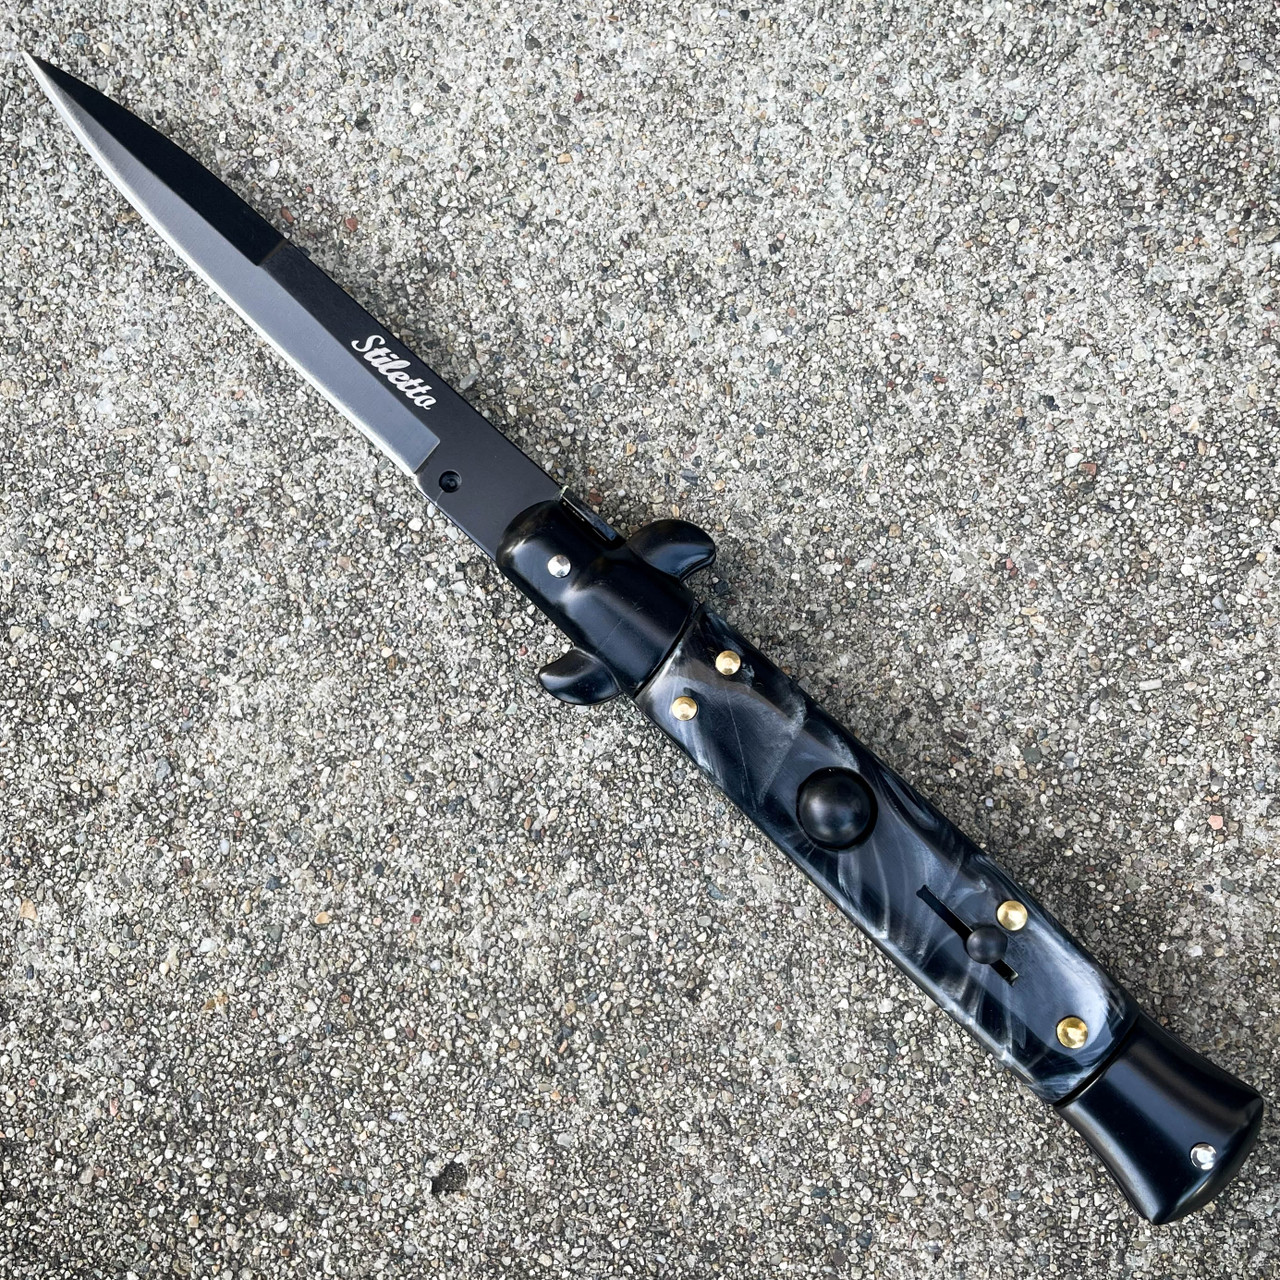 Pearl Handle Switchblade - OTF Stiletto Knife